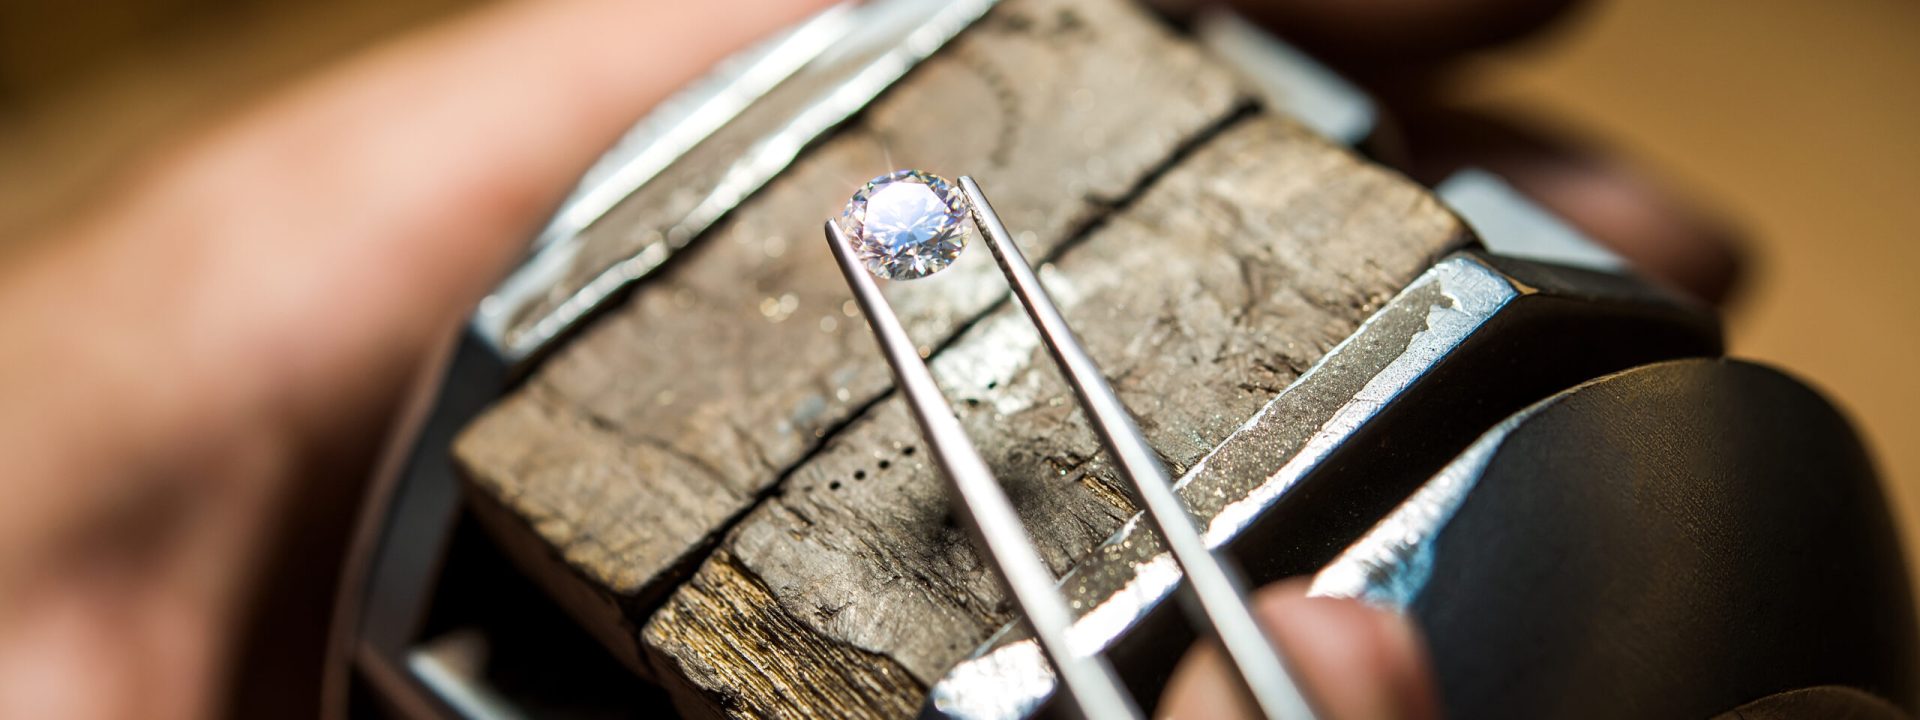 Jeweler Starting Work on Loose Diamond with Tweezers